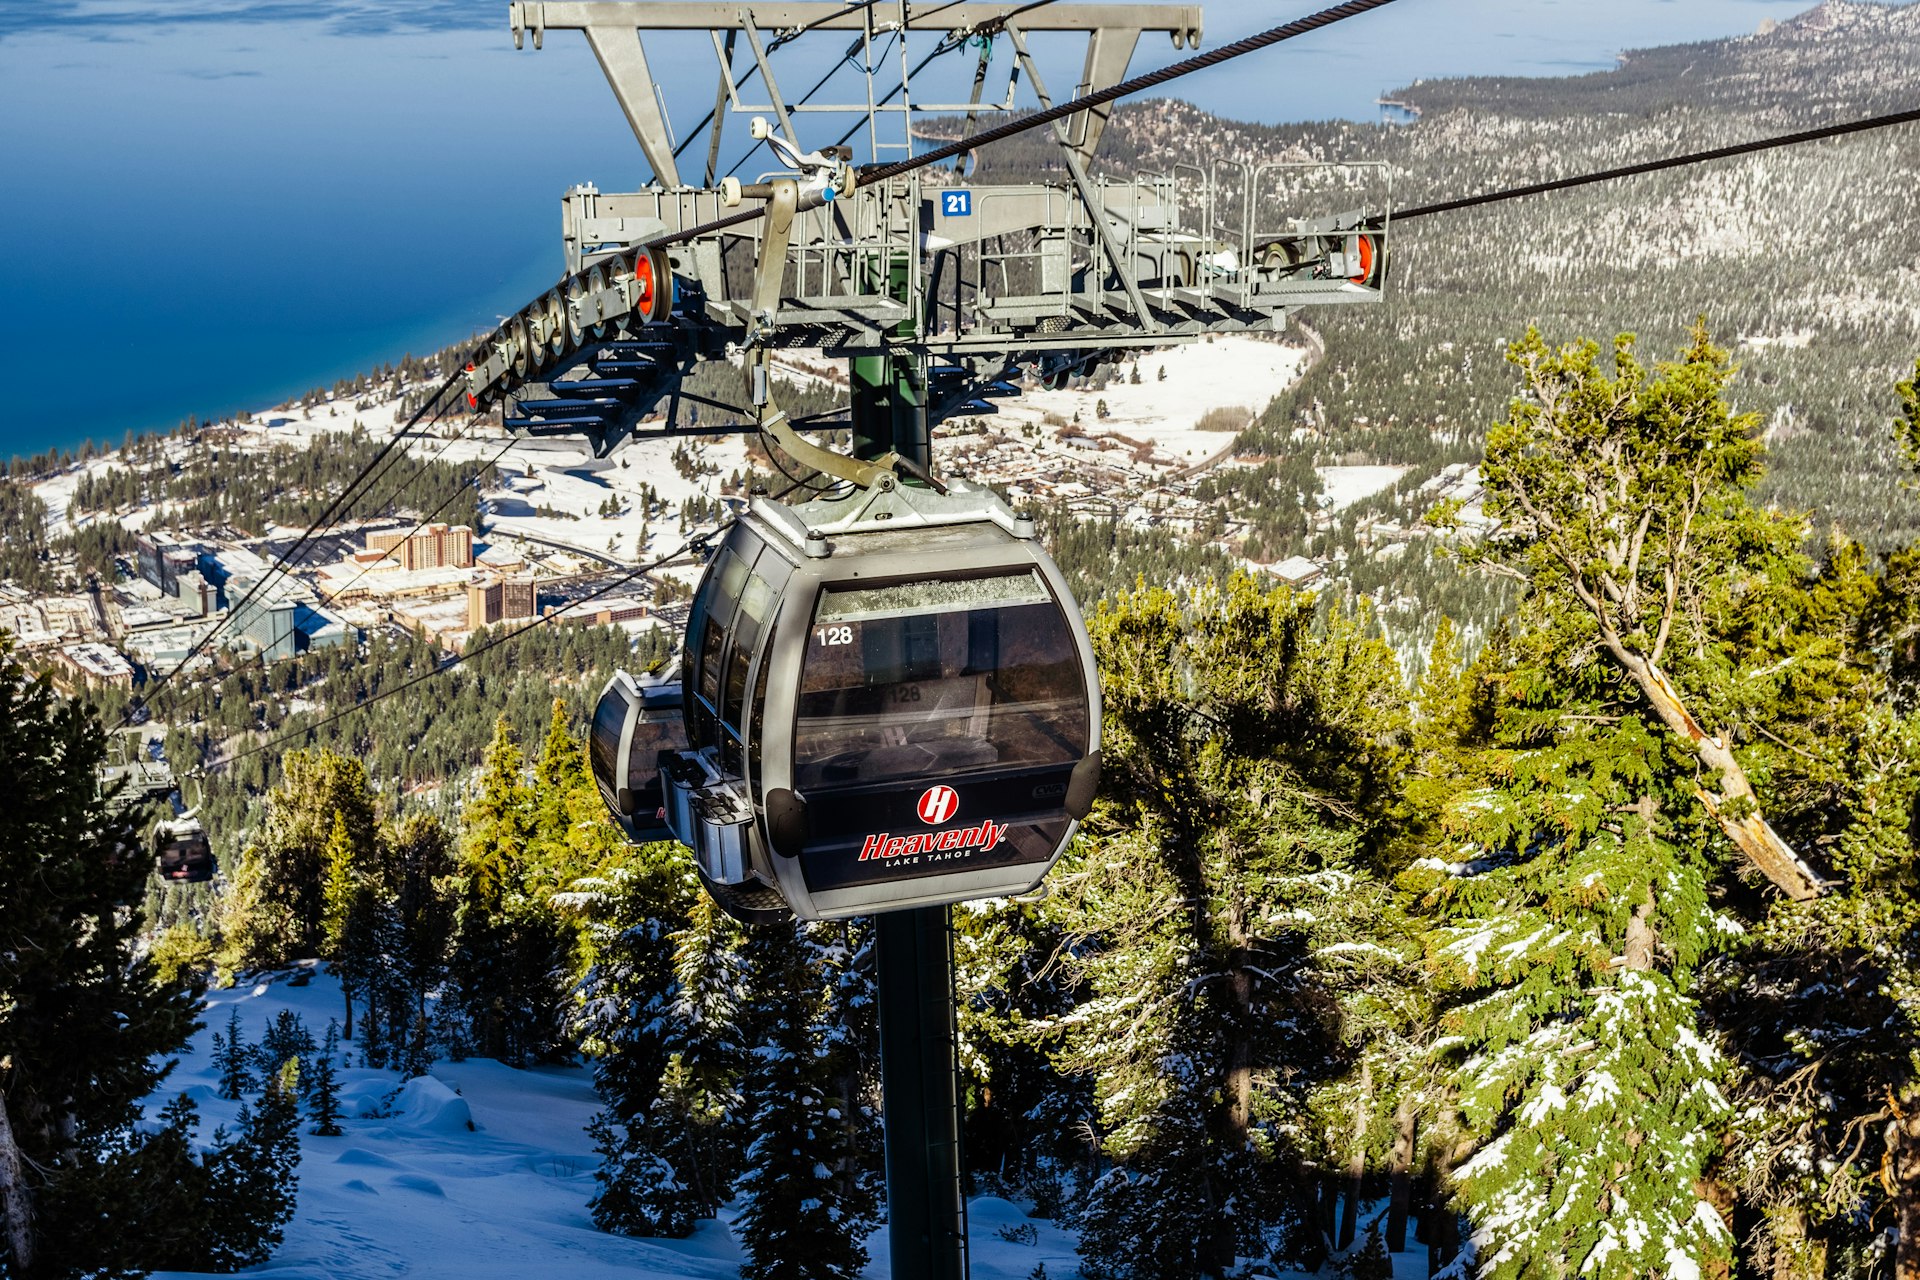 Heavenly Ski Resort's gondolas